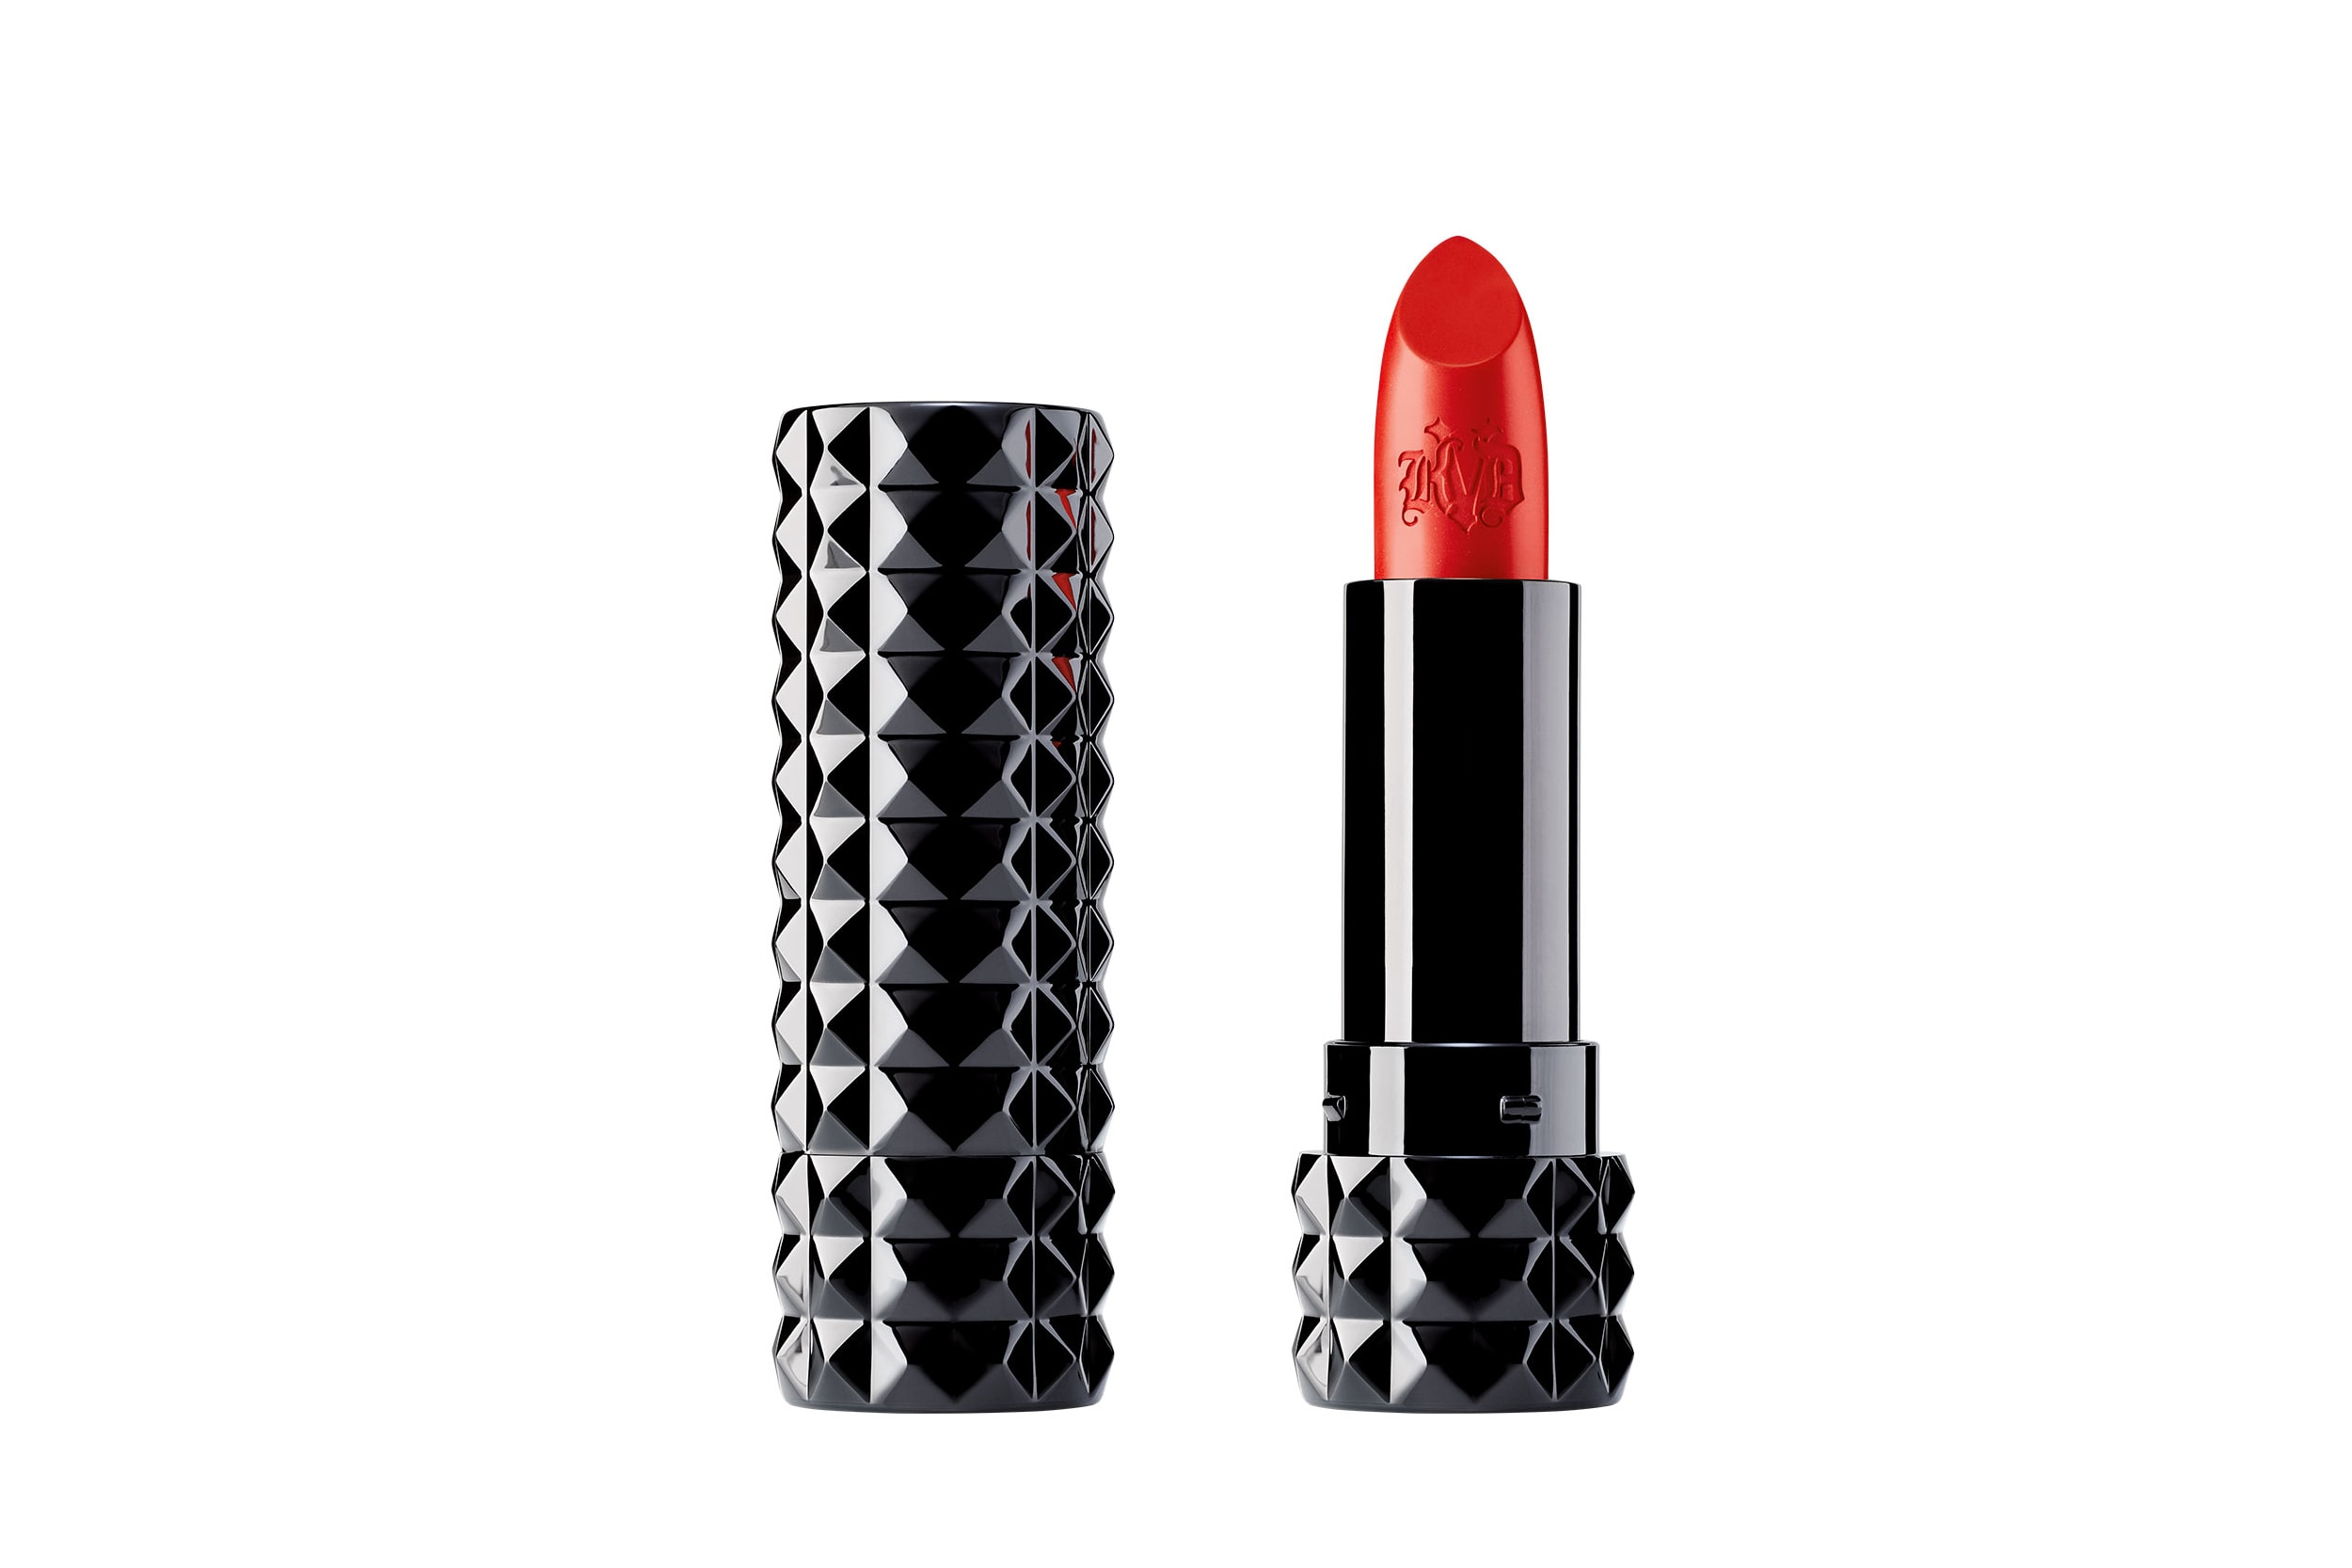 Kat Von D Beauty Studded Kiss Creme Lipstick 40 Shades Vegan Cruelty Free Color Range Velvet Formula